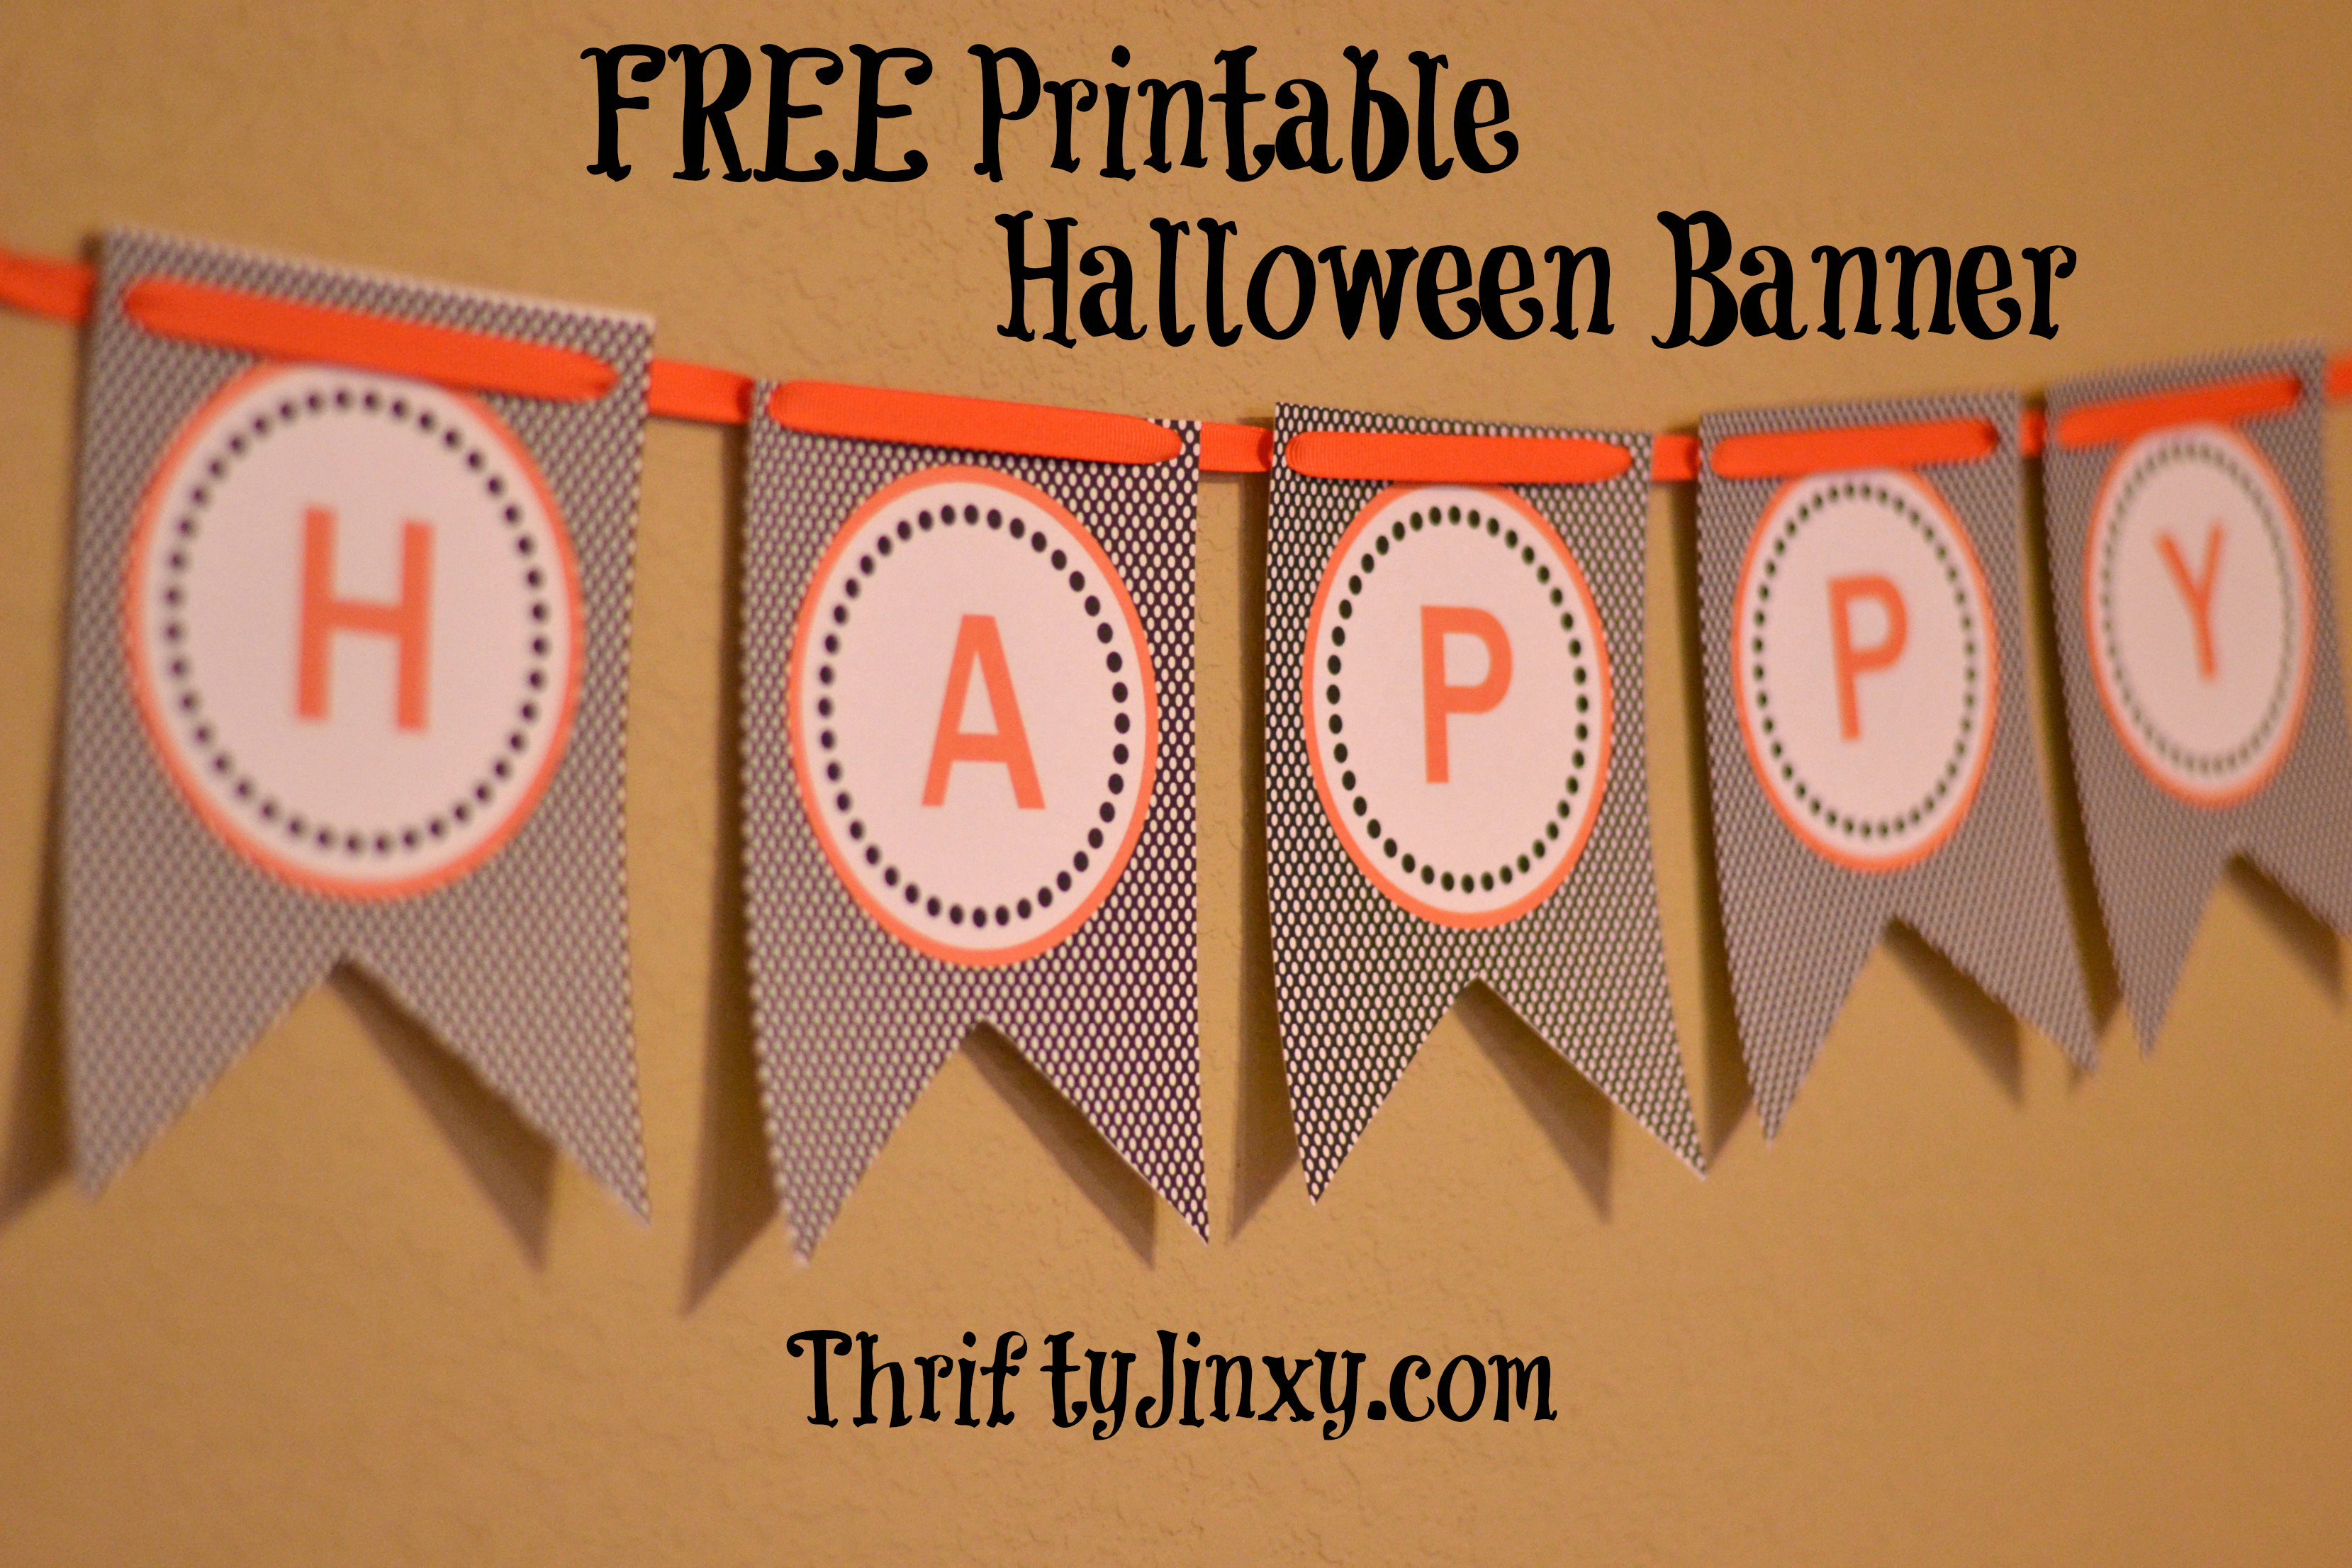 Free Printable Halloween Banner - Thrifty Jinxy - Free Printable Halloween Banner